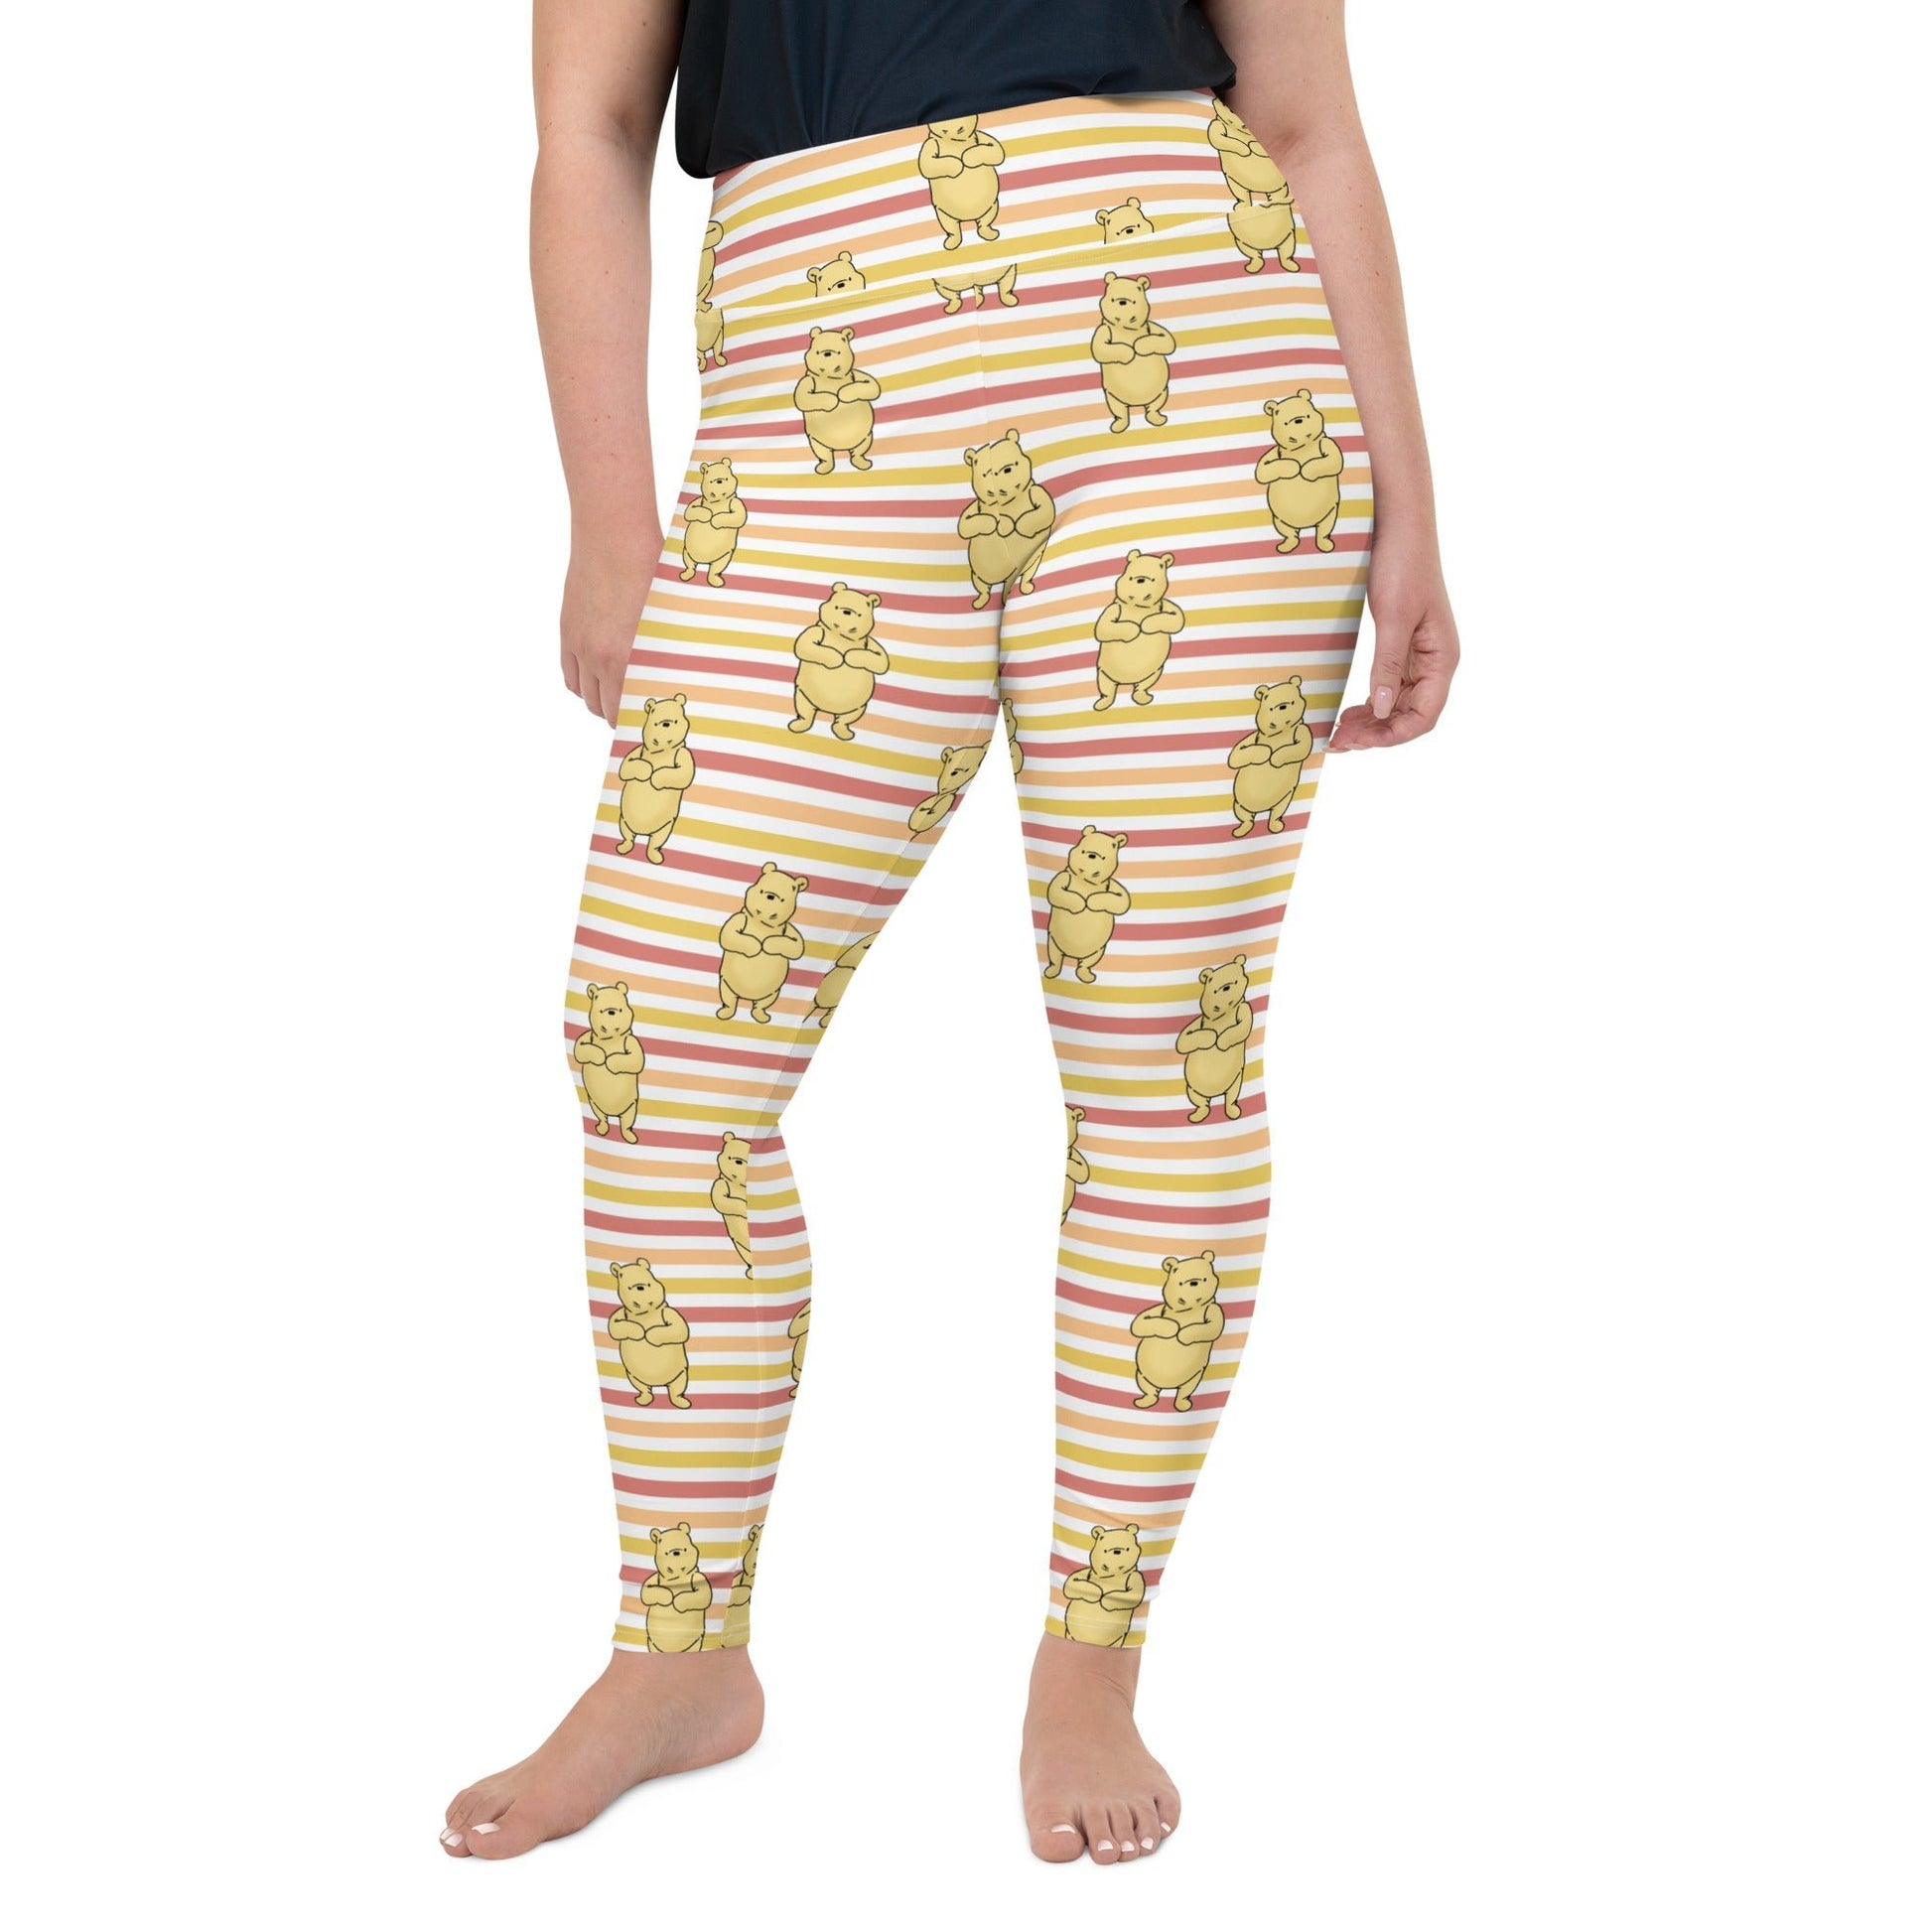 Pooh Stripes Plus Size Leggings adult disneyadult disney clothingWrong Lever Clothing